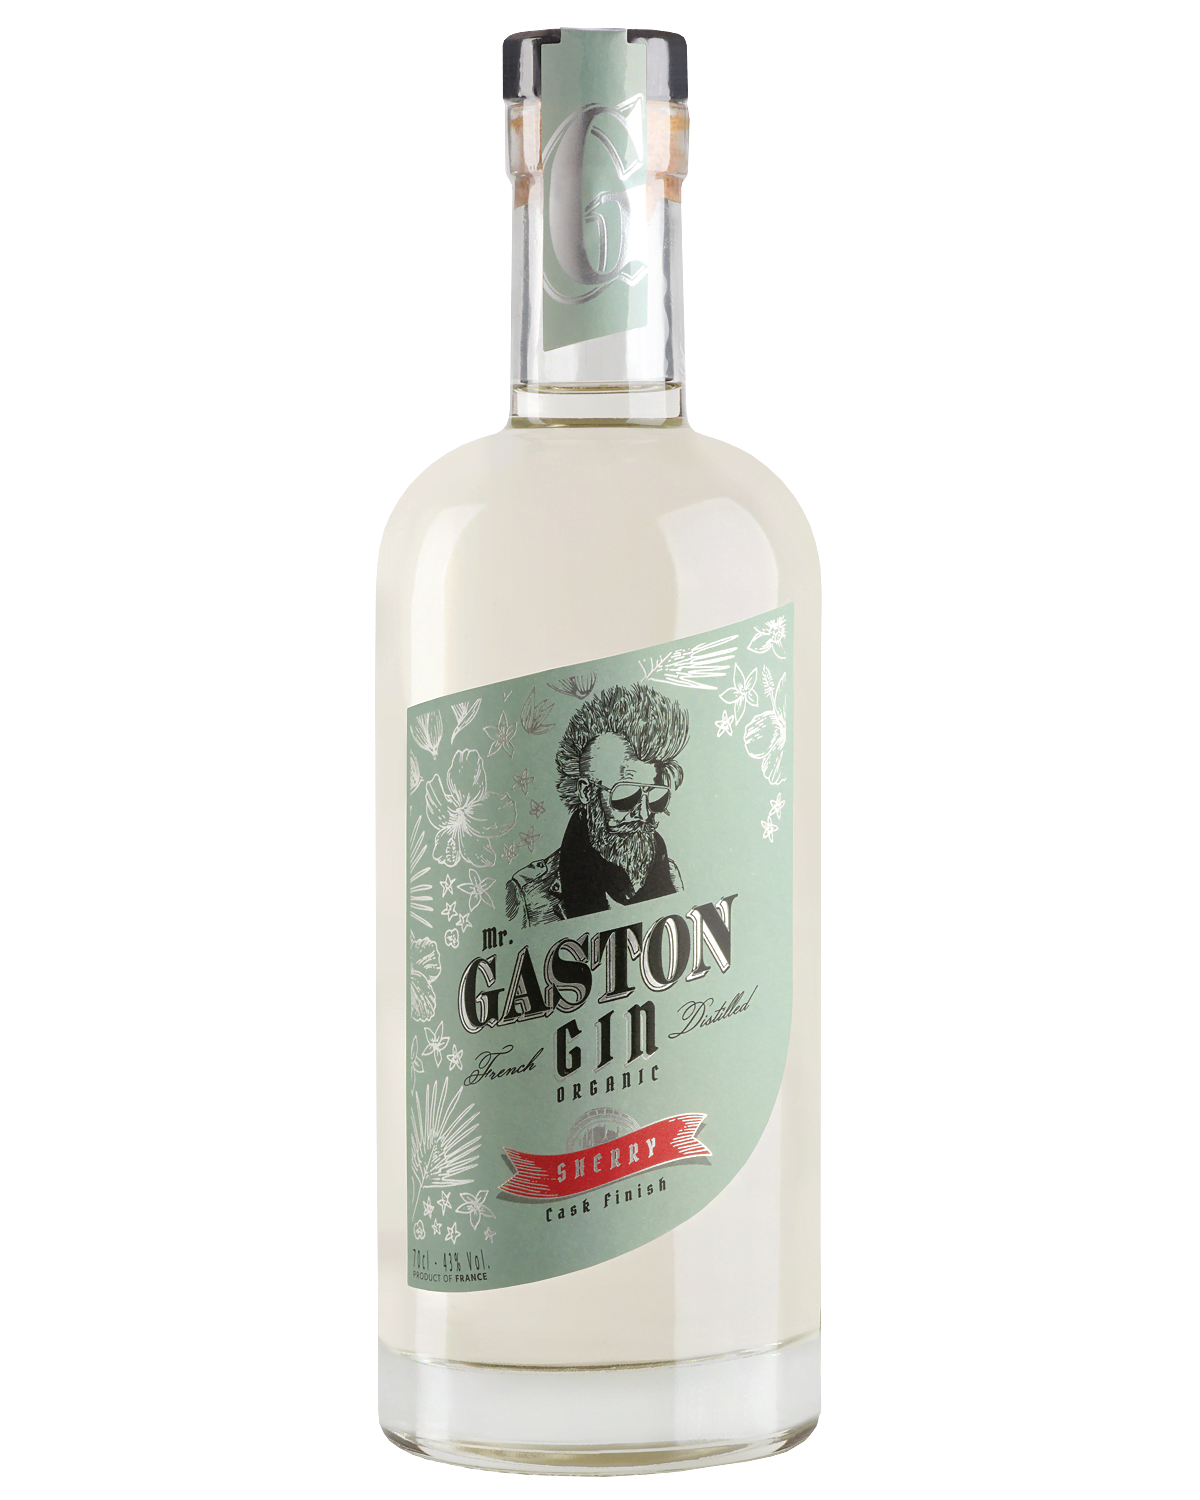 Мистер Гастон Джин Органик Шерри Каск Финиш / Mr. Gaston Gin Organic Sherry Cask Finish